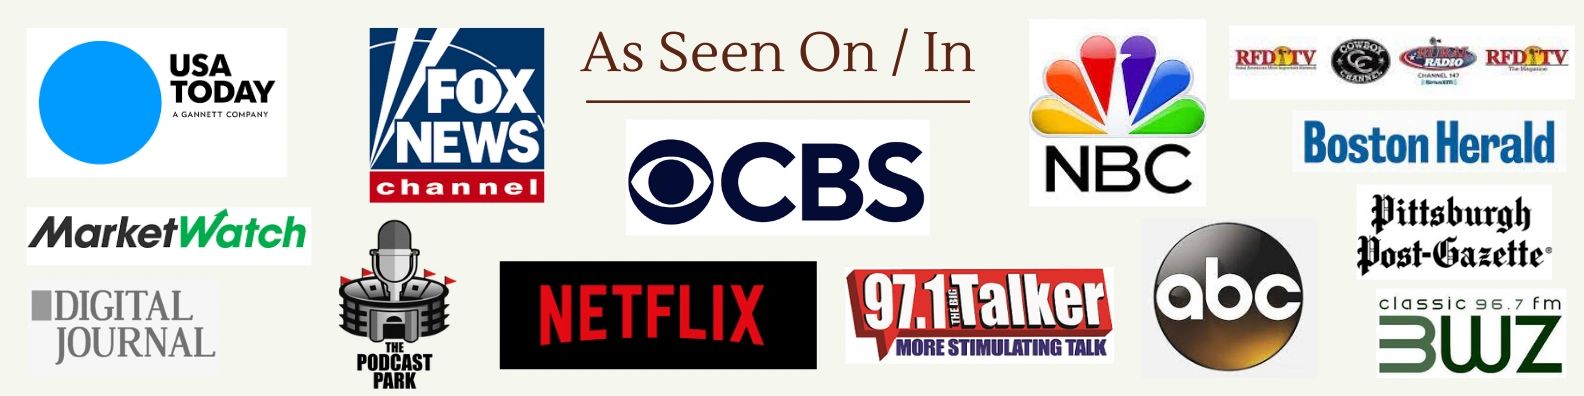 Media logos including USA Today, Fox News, CBS, Netflix, NBC, and ABC